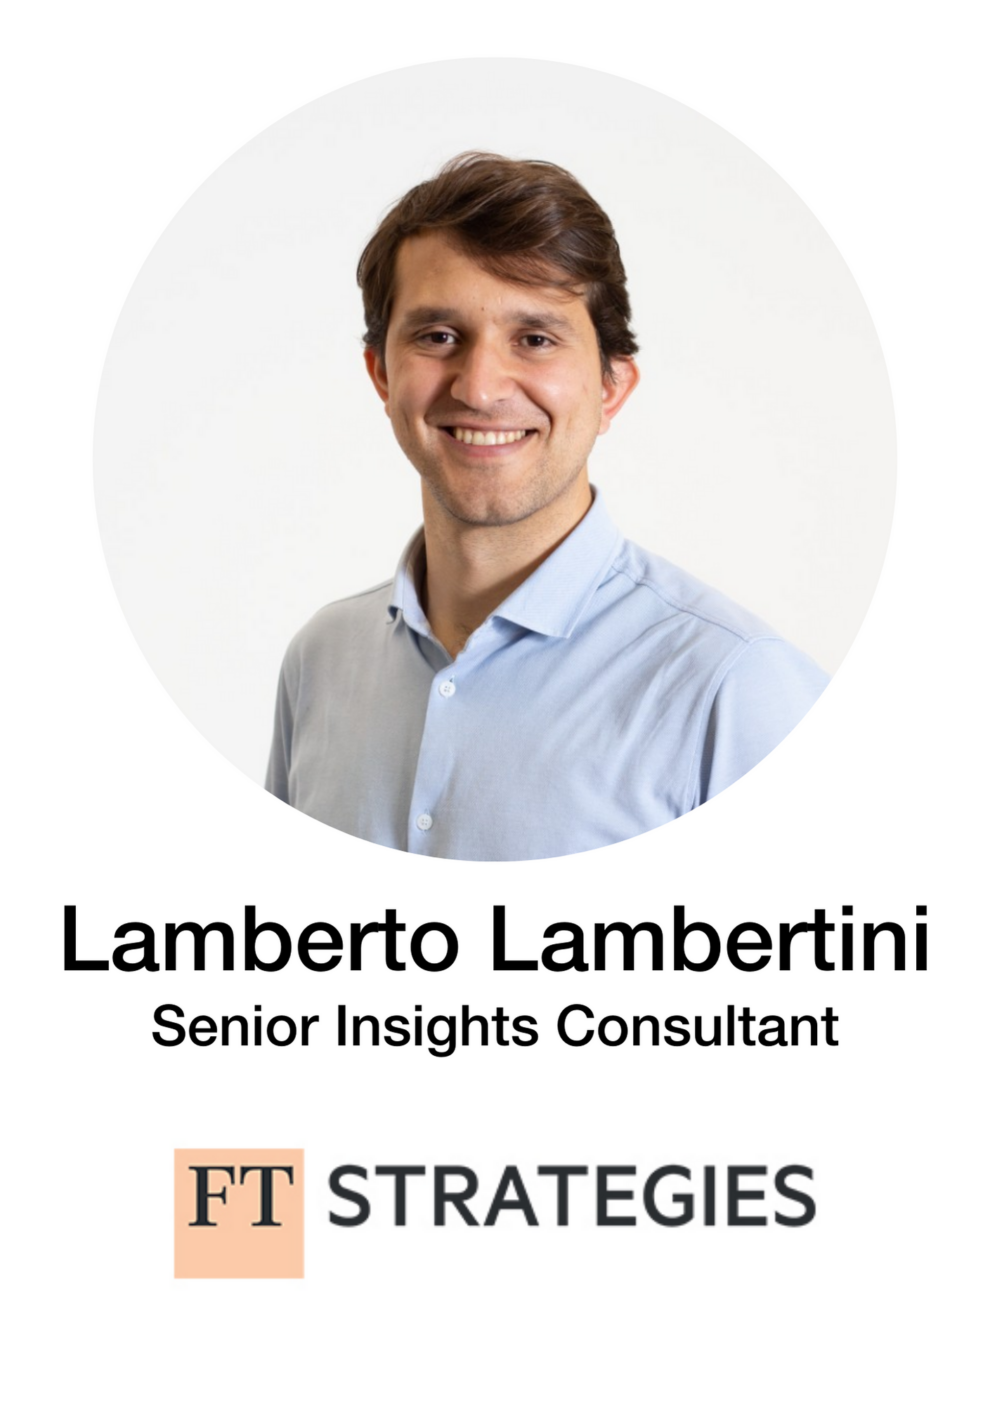 View Lamberto's LinkedIn